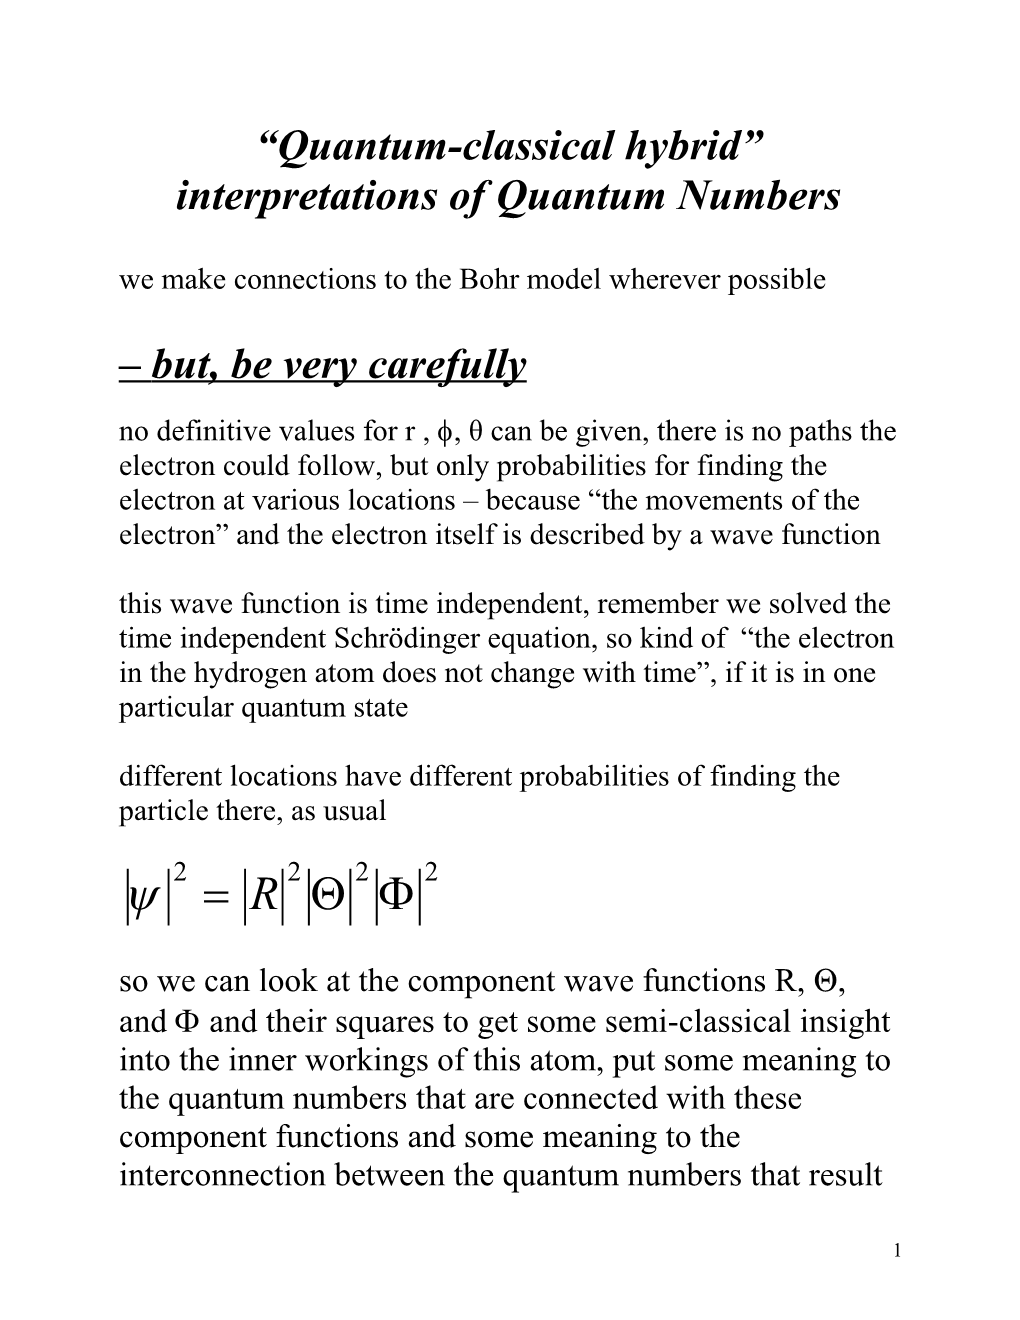 Semi-Classical Interpretations of Quantum Numbers